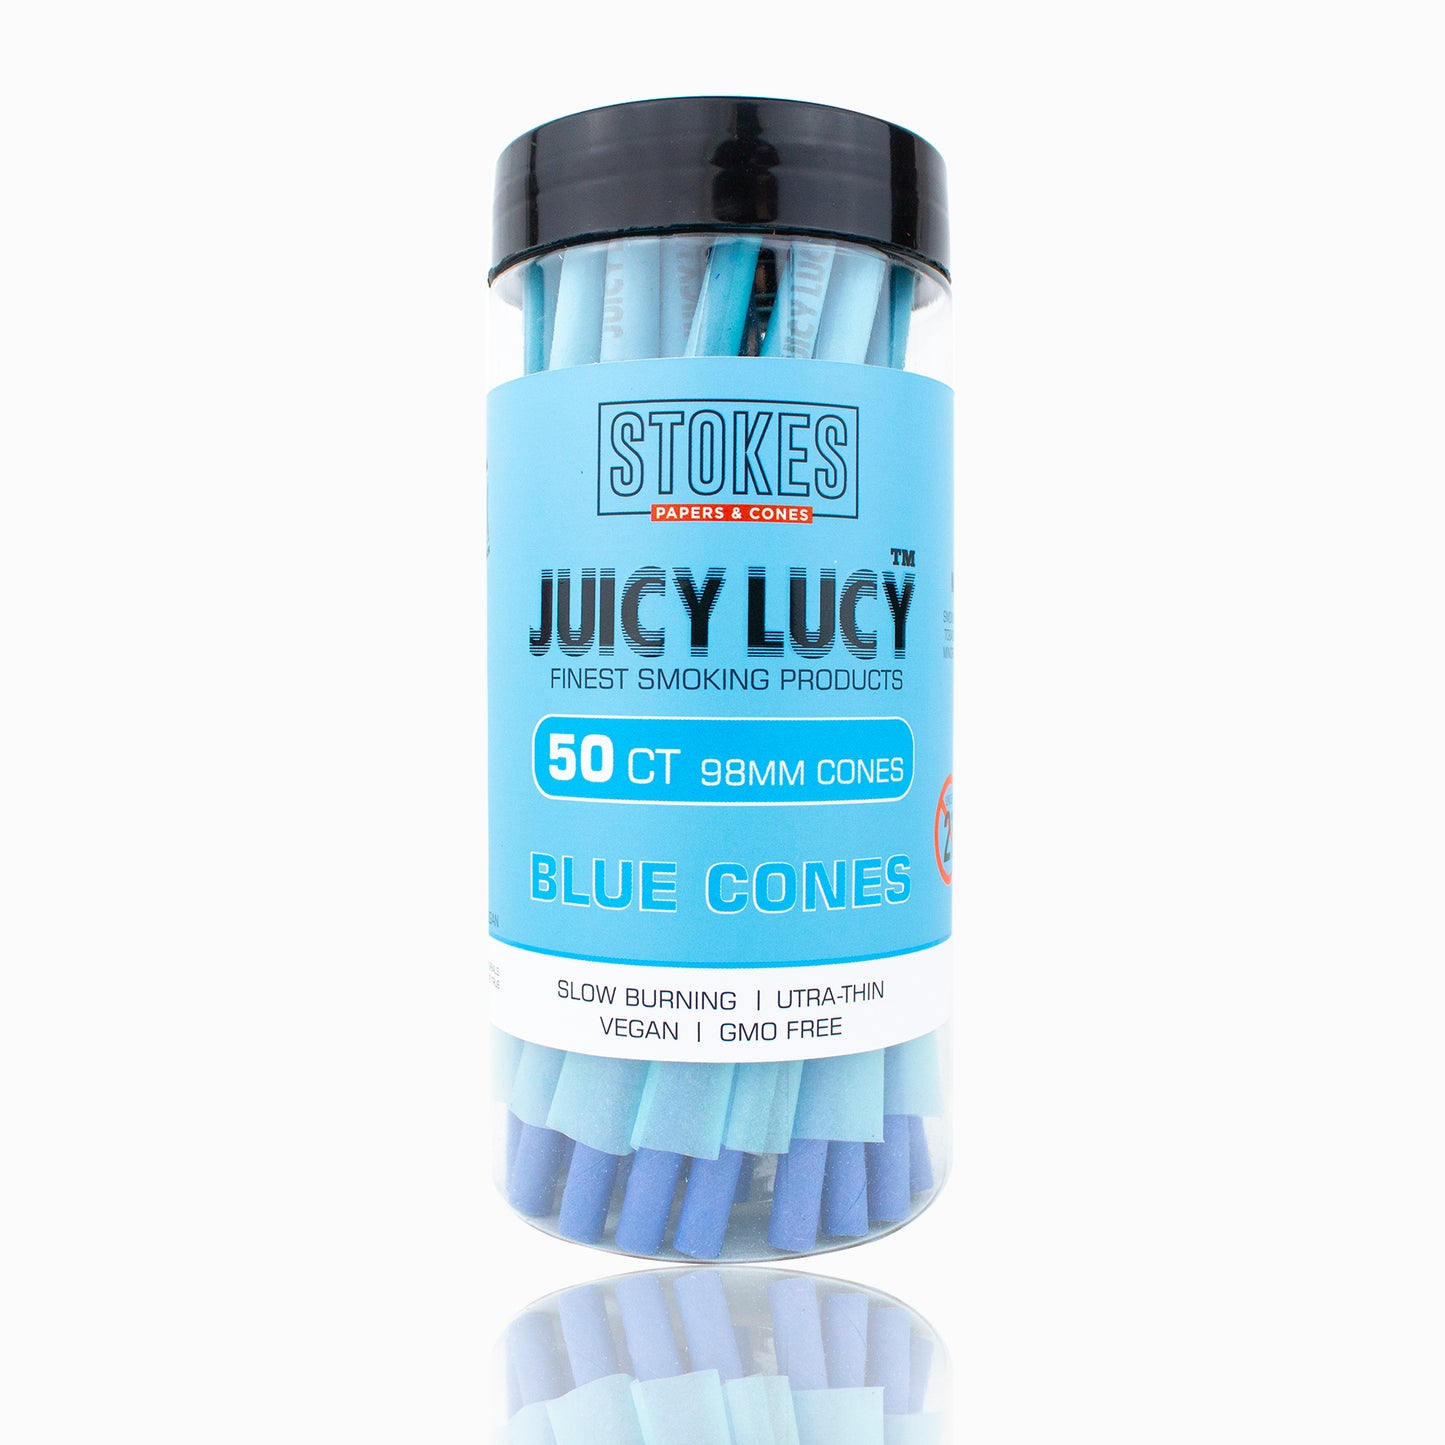 STOKES Juicy Lucy Blue Cones 98mm (Jar 50ct)